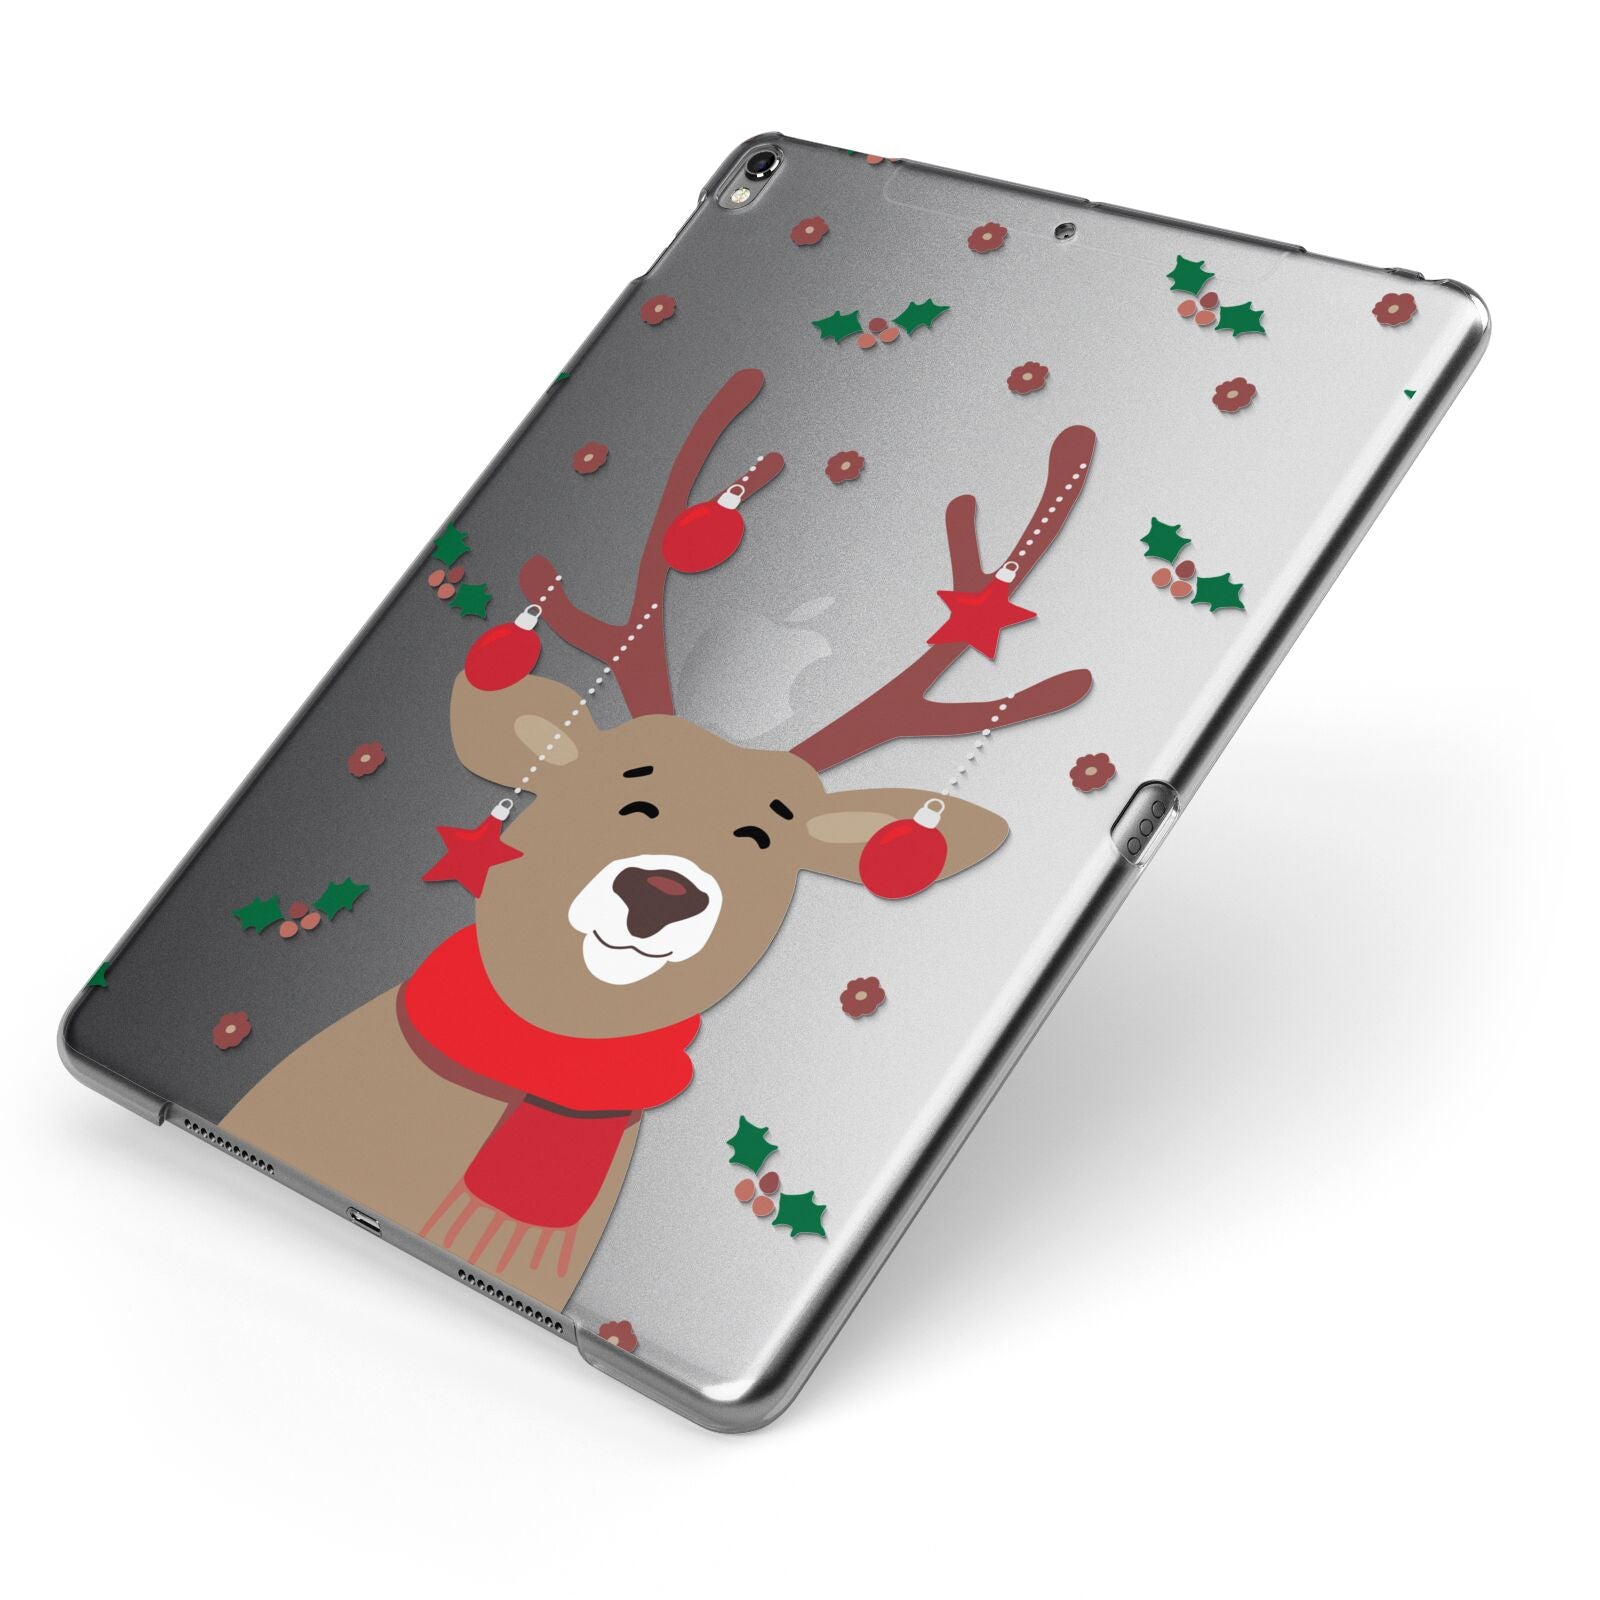 Reindeer Christmas Apple iPad Case on Grey iPad Side View